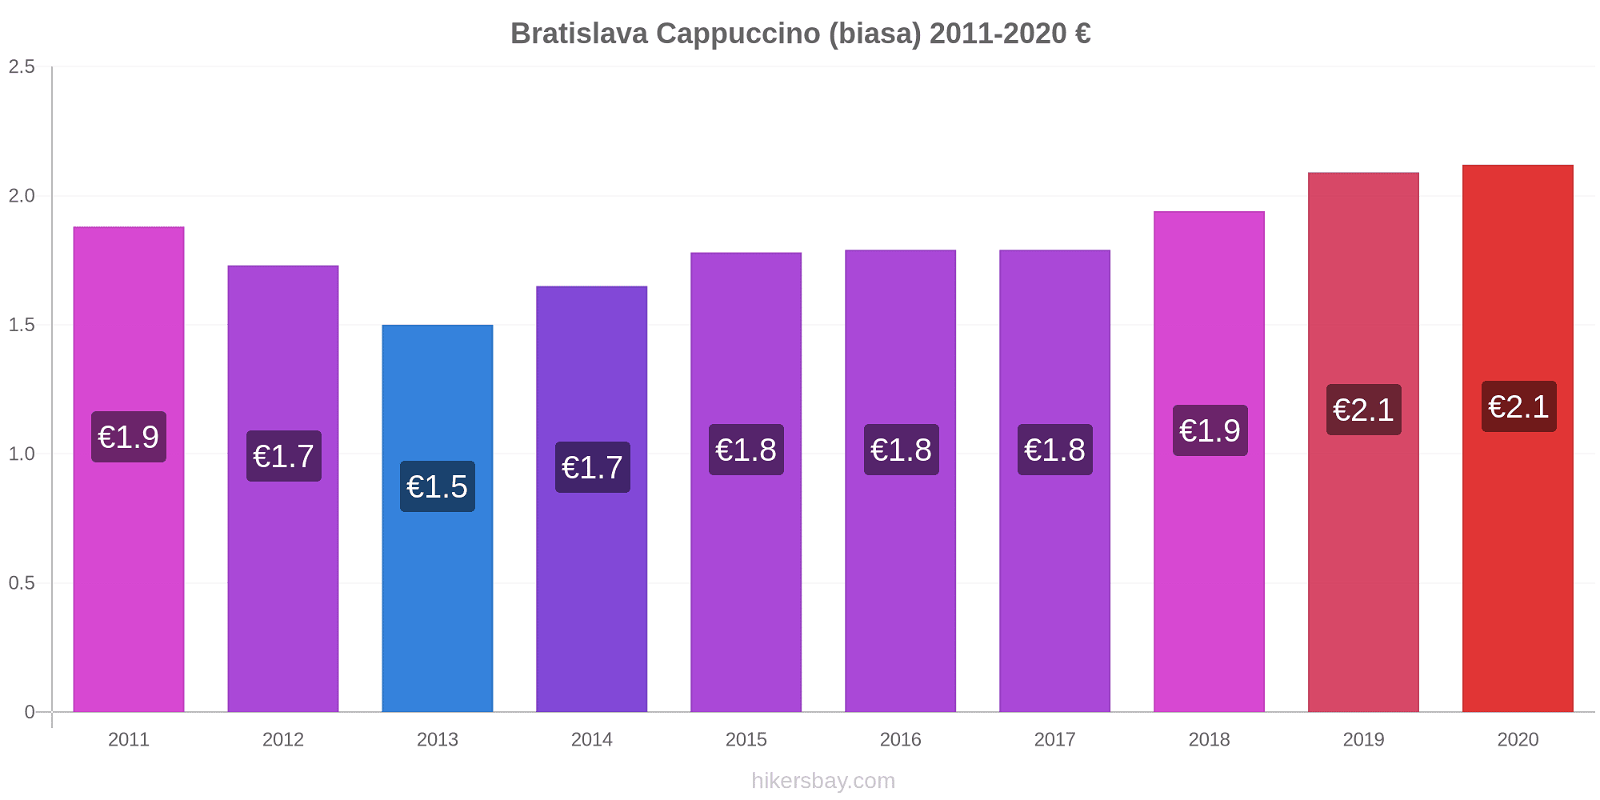 Bratislava perubahan harga Cappuccino (biasa) hikersbay.com